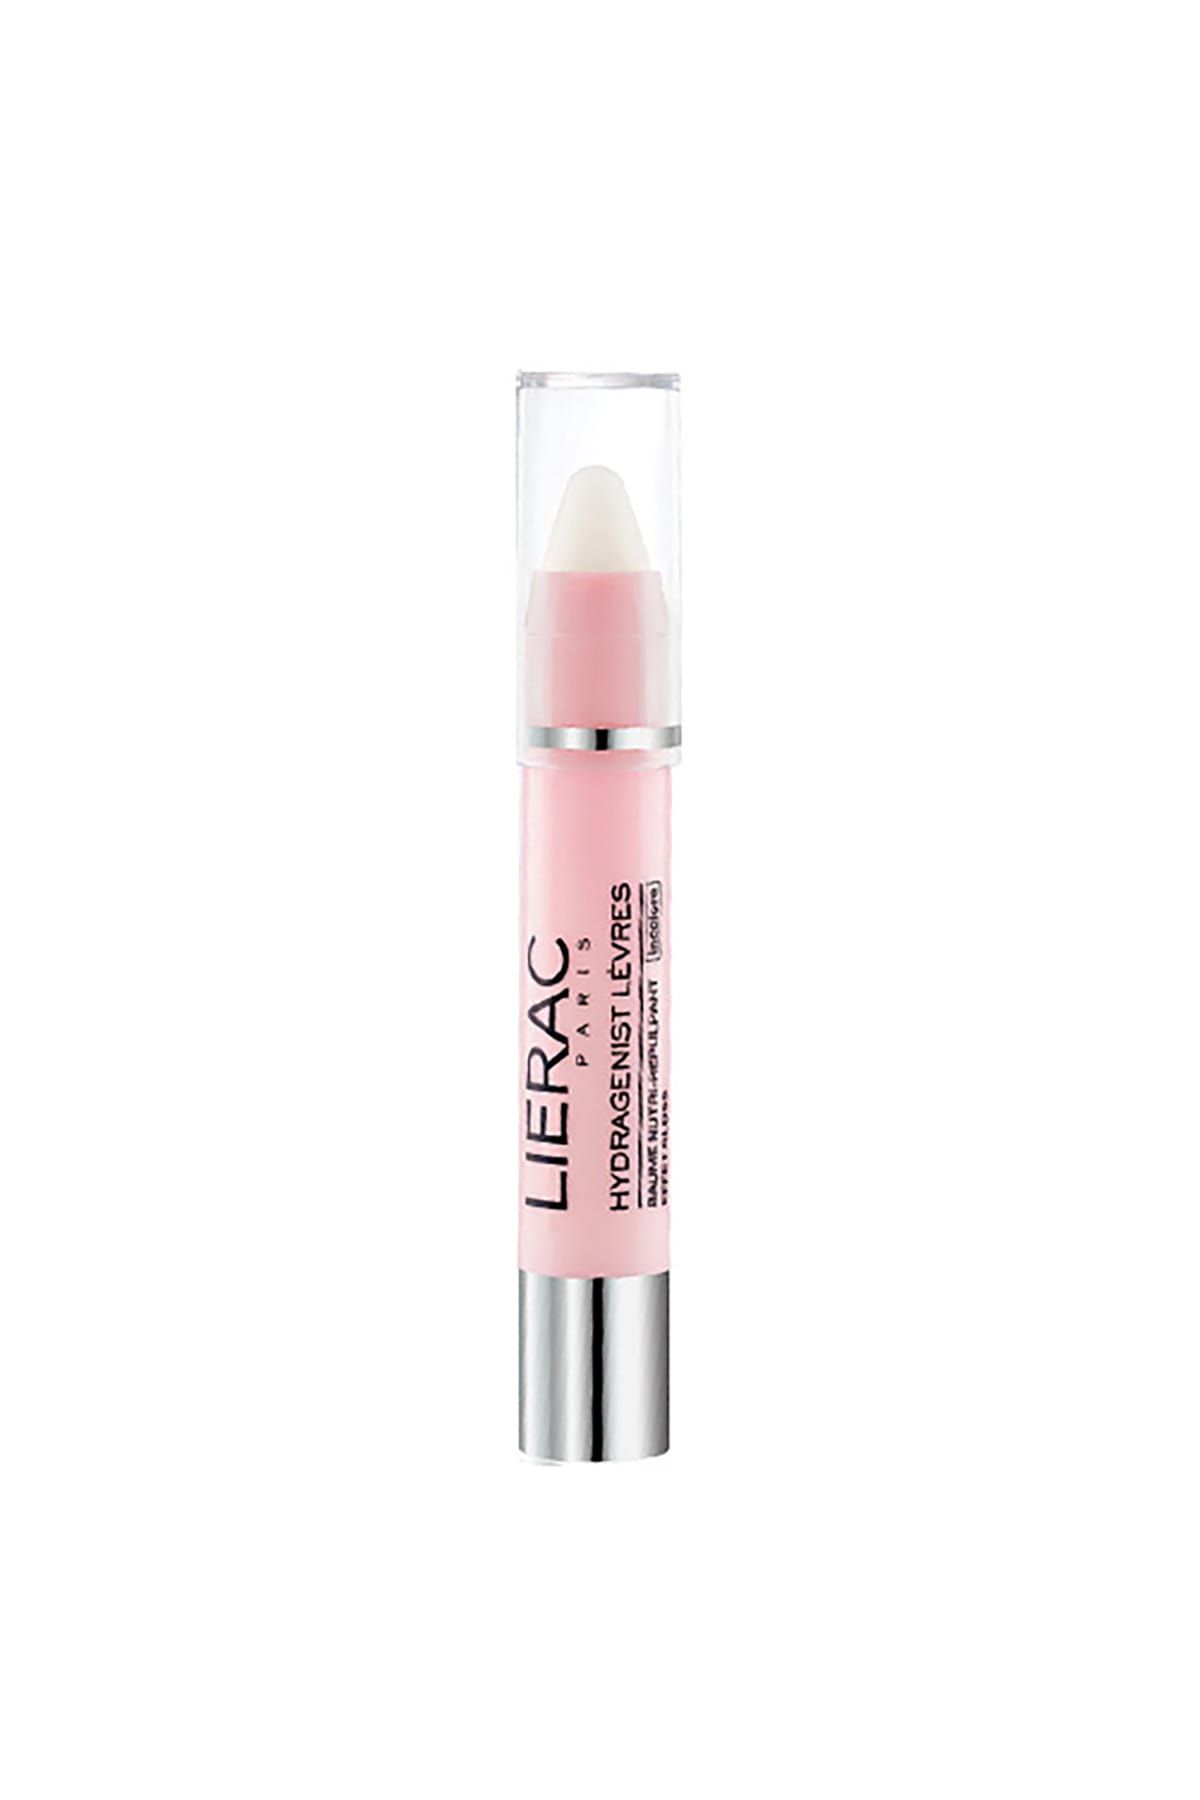 Lierac Pembe Dudak Balmı - Hydragenist Pink Gloss Effect Lip Balm 3 g 3508240001162